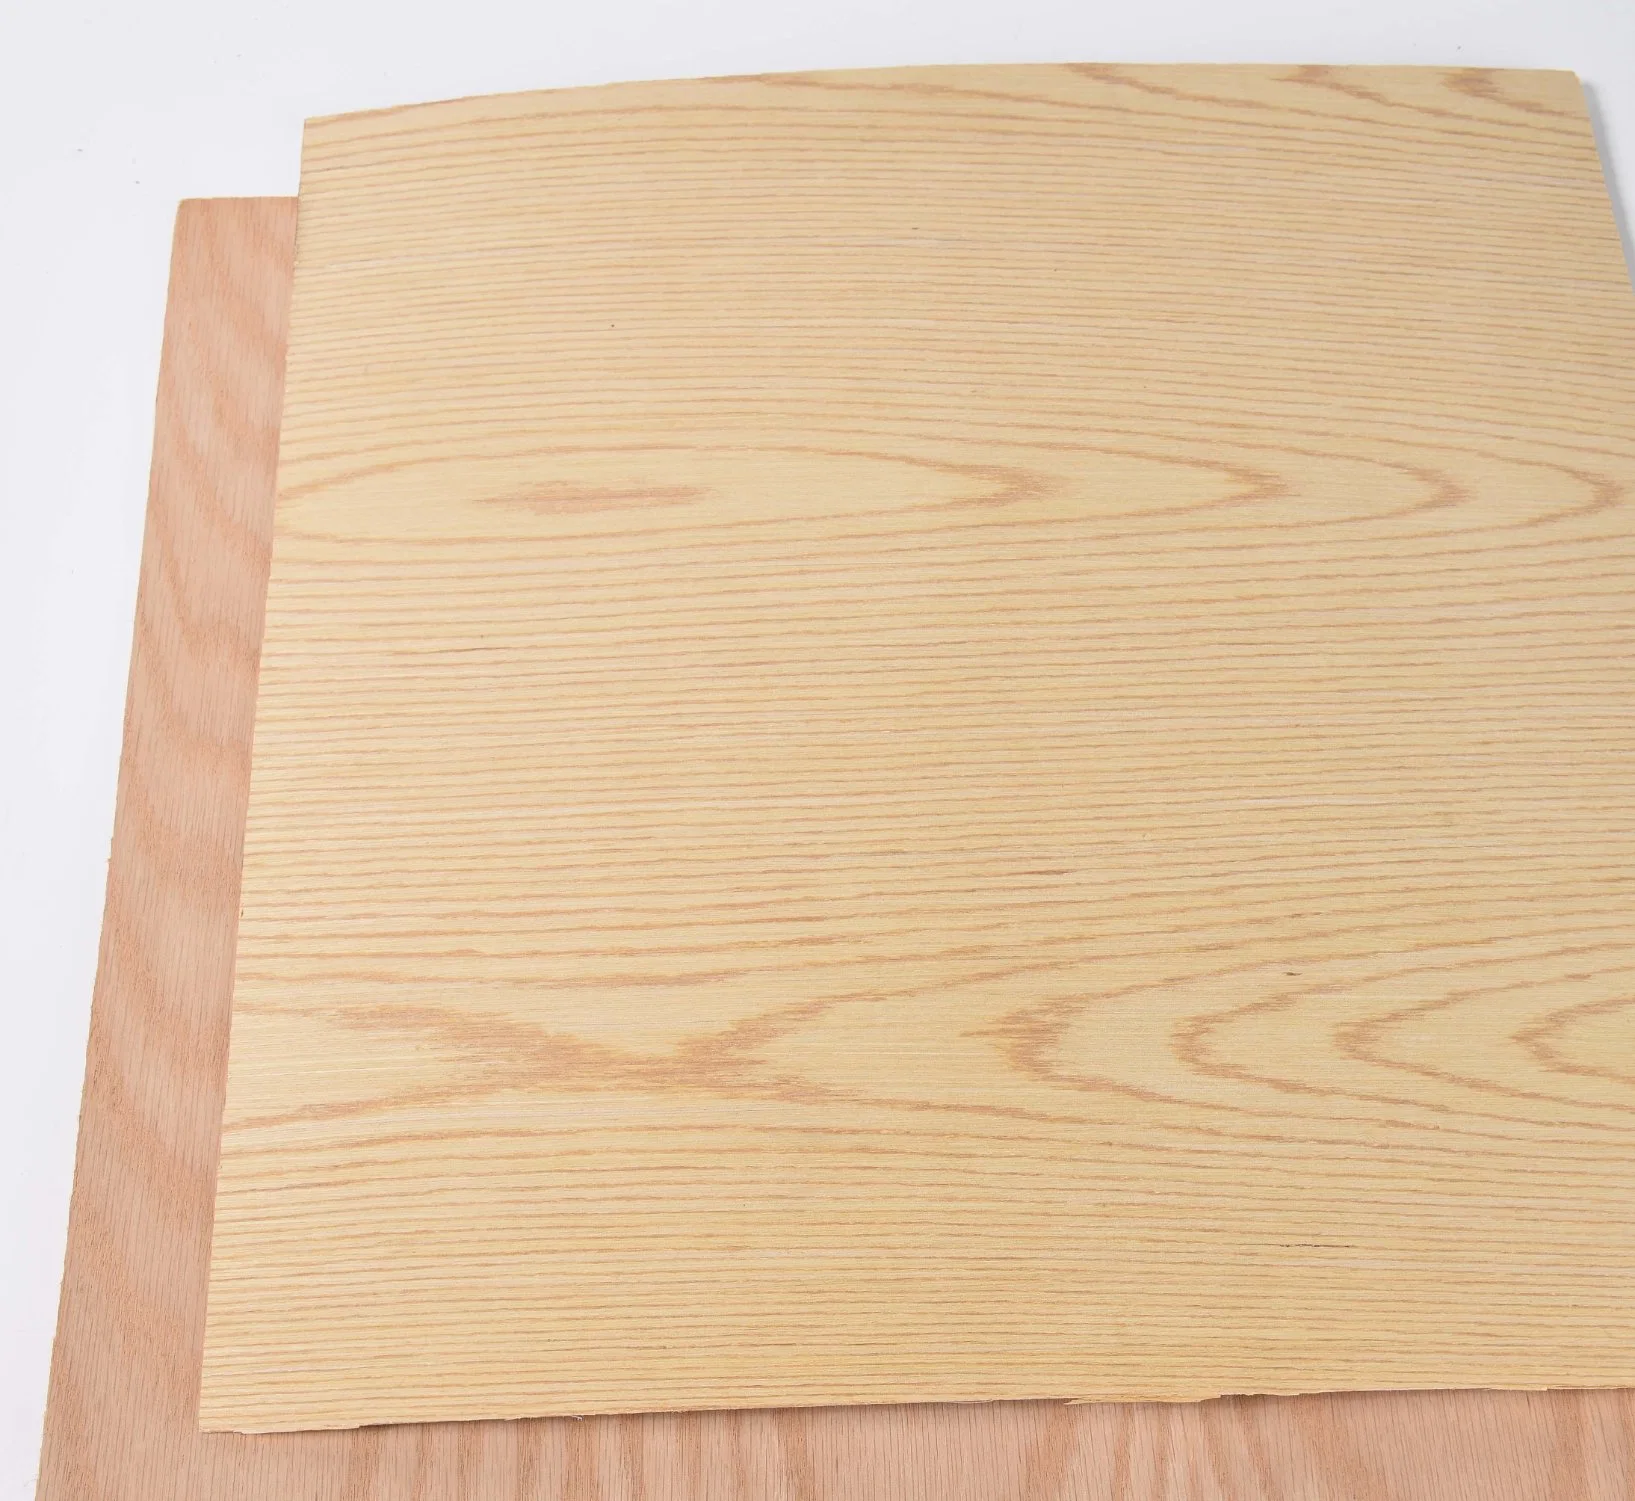 3mm a 25mm Birch/OSB/Poplar/Pino la melamina, madera contrachapada elegante panel de madera